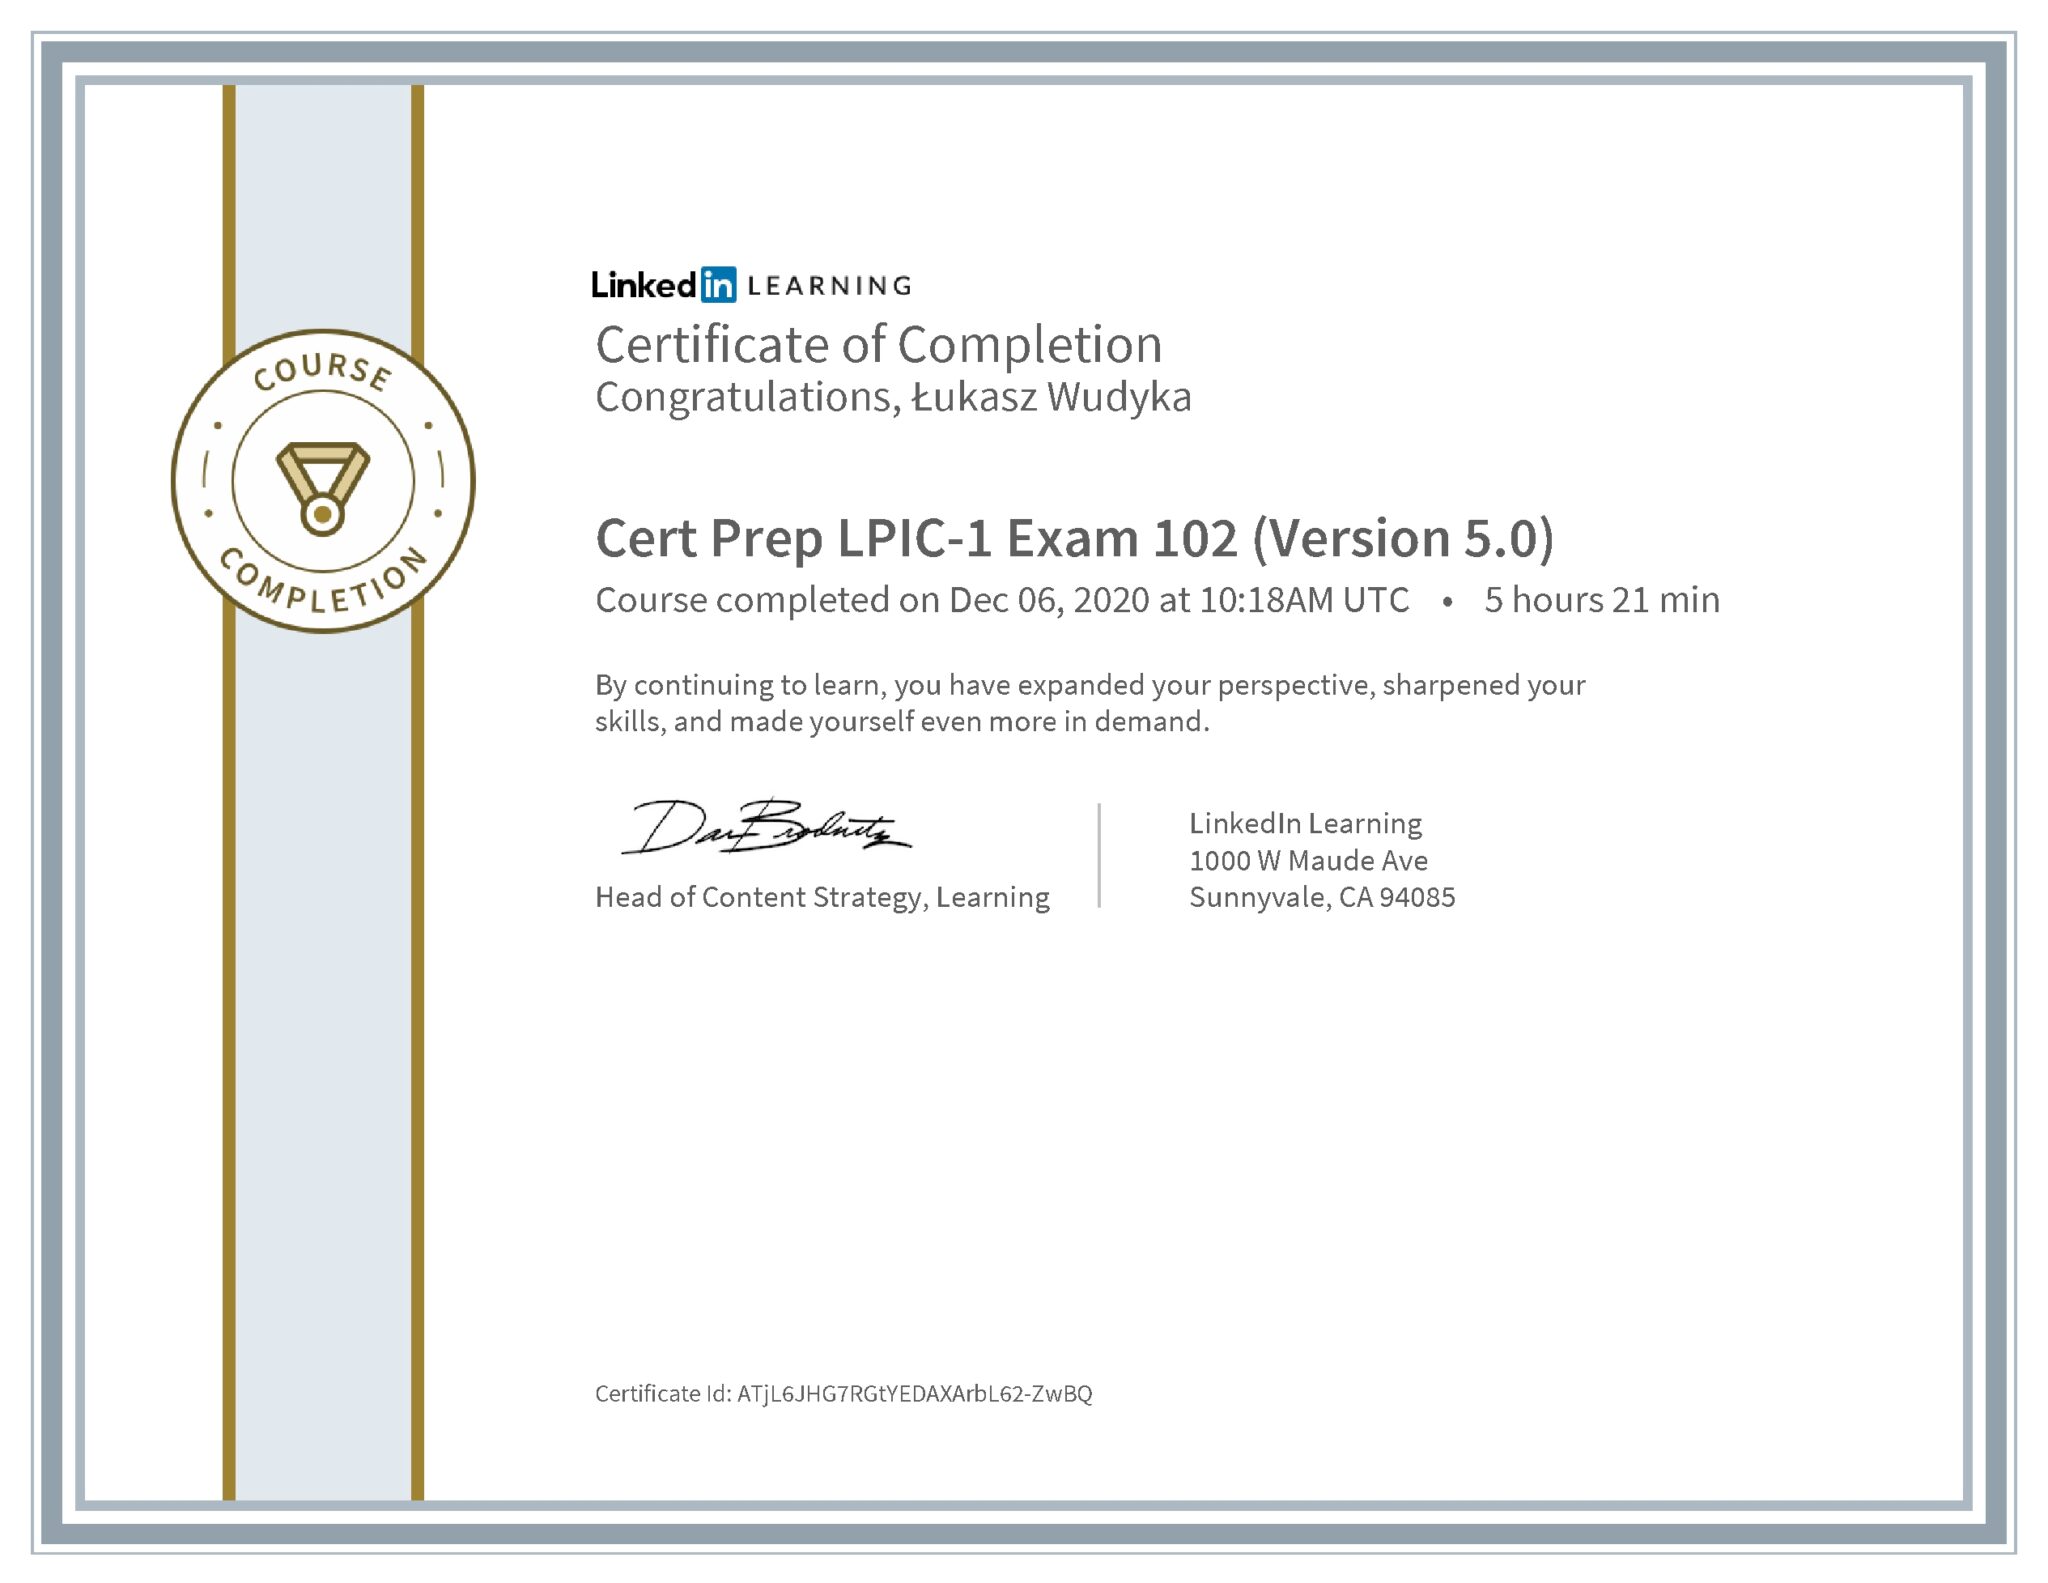 Łukasz Wudyka certyfikat LinkedIn Cert Prep: LPIC-1 Exam 102 (Version 5.0)